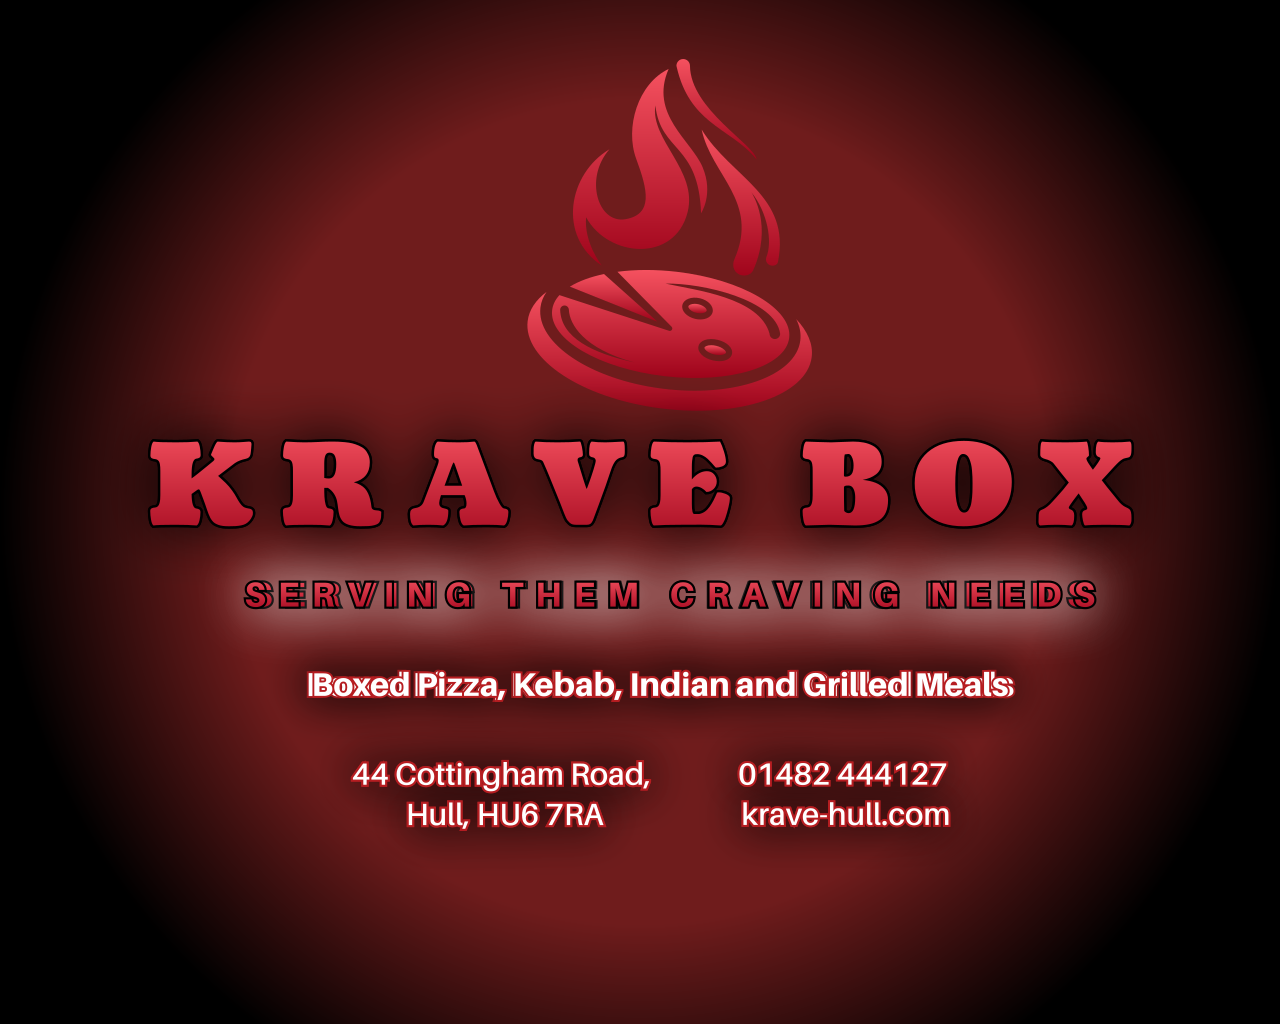 www.krave-box.com's logo